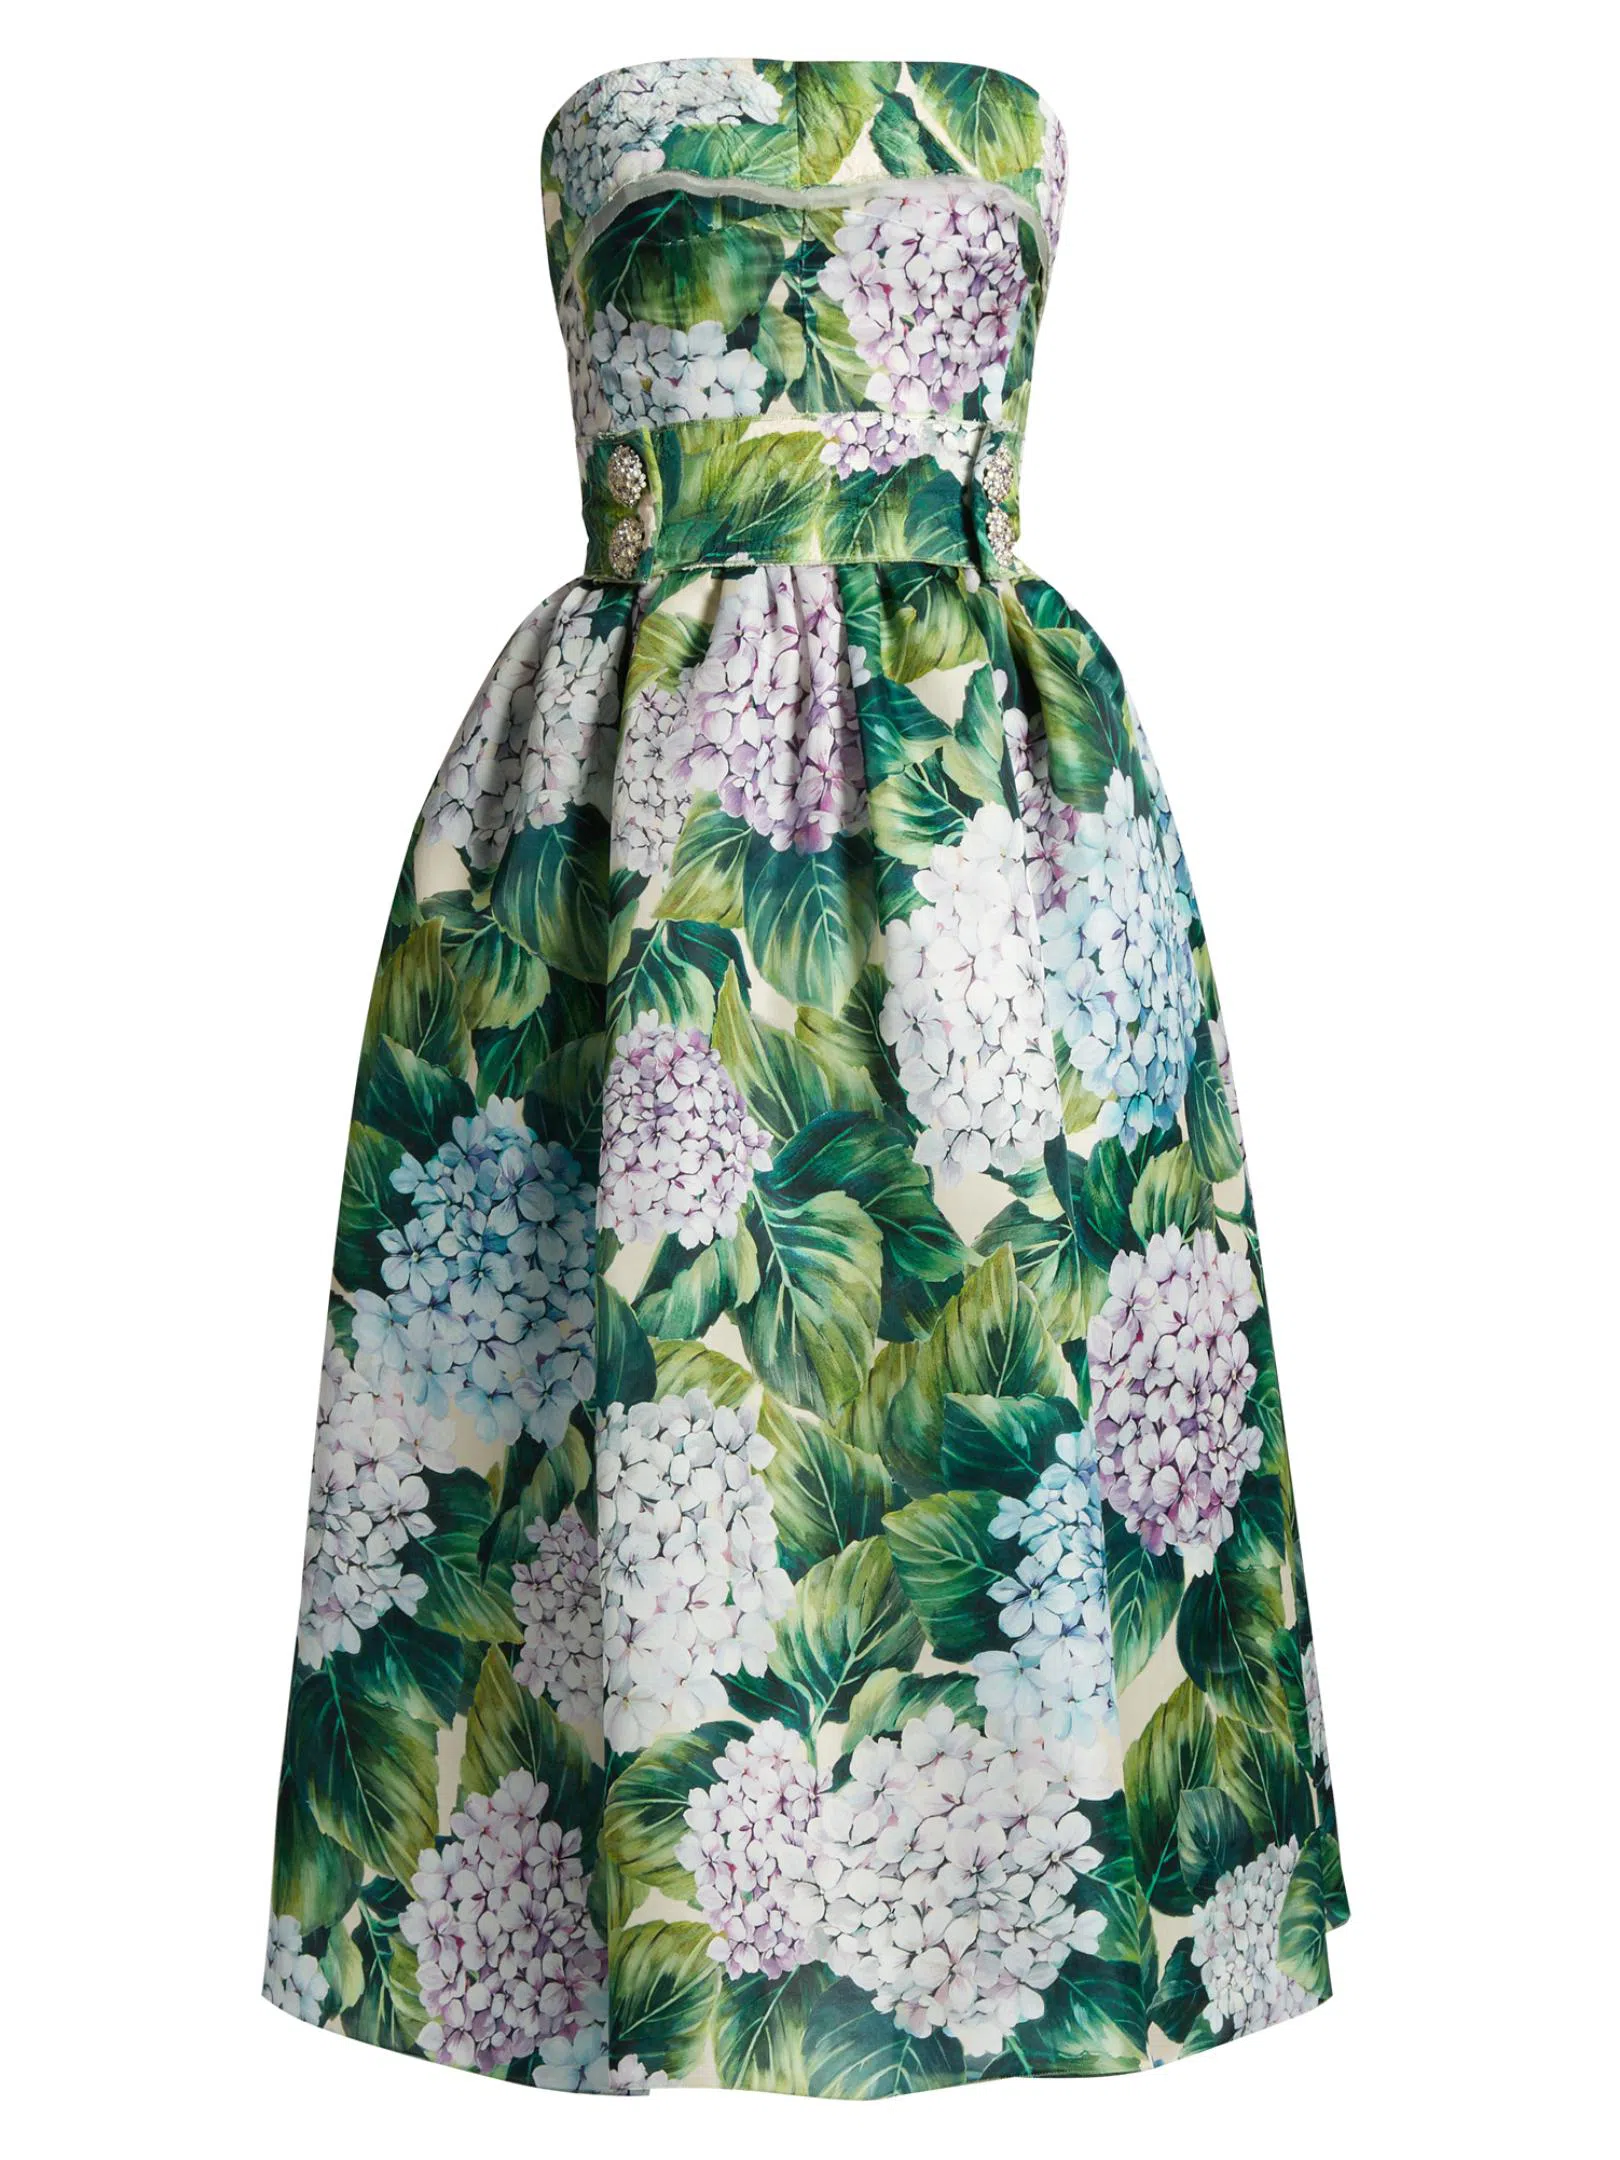 Dolce & Gabbana hydrangea strapless dress size 10